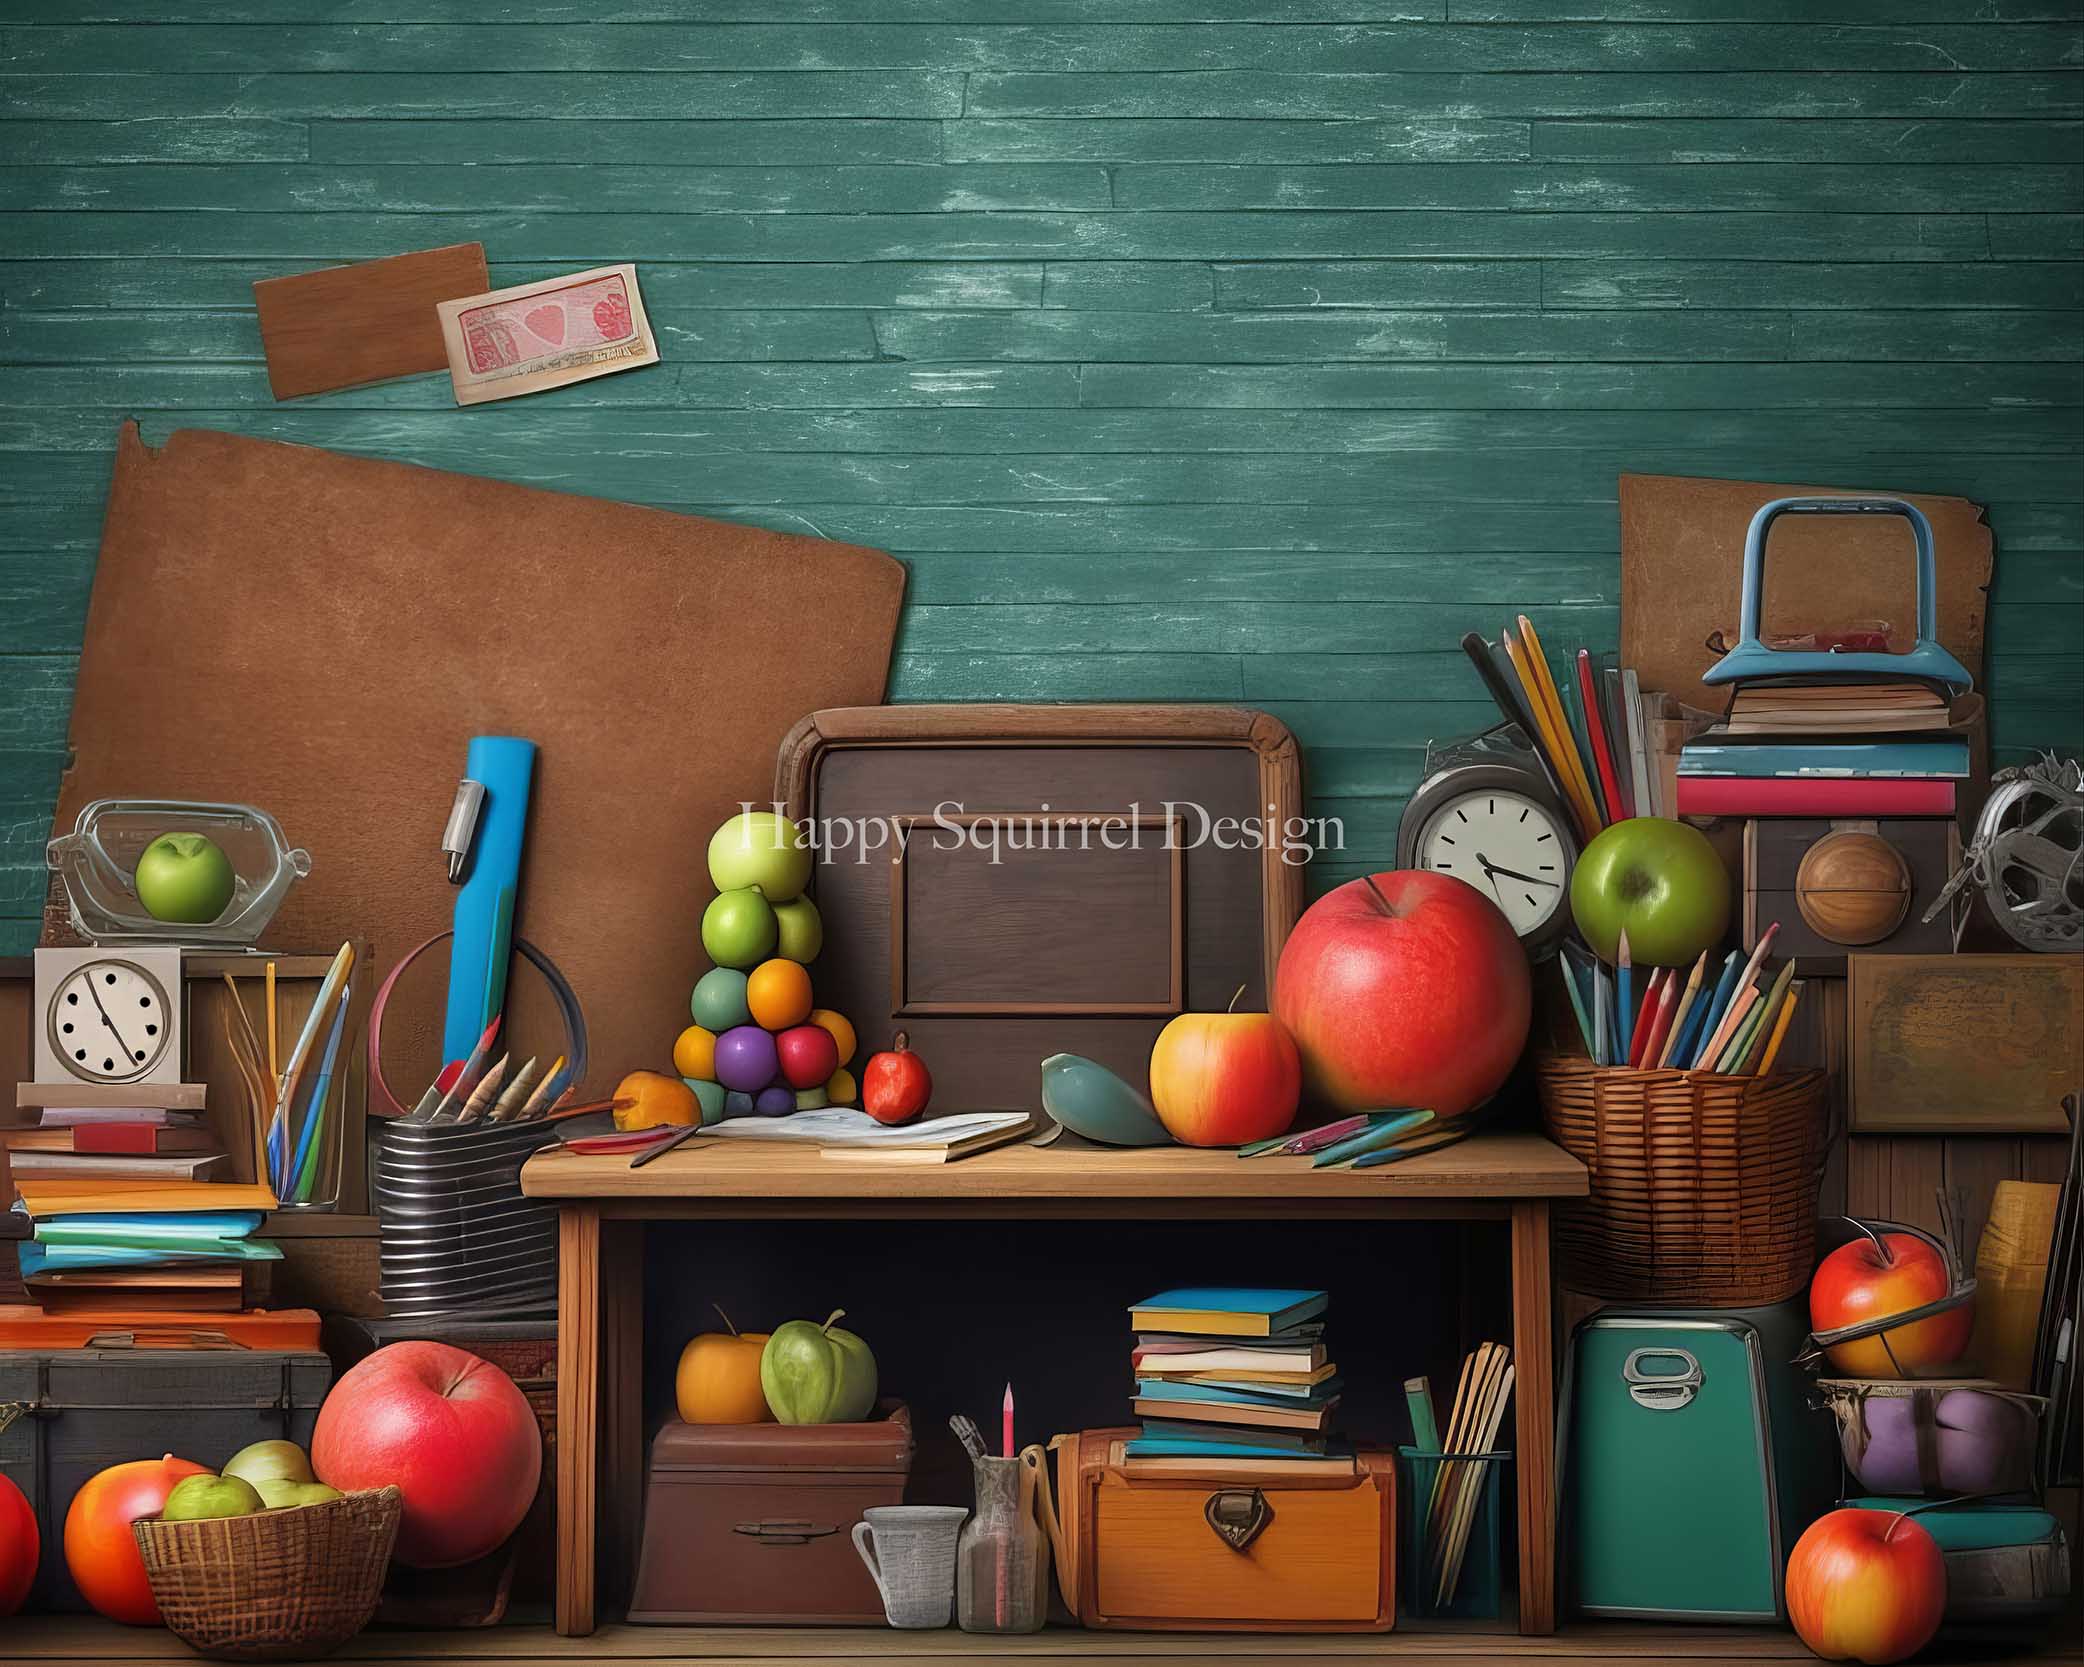 Kate Teachers Pet Classroom Backdrop Designed by Happy Squirrel Design